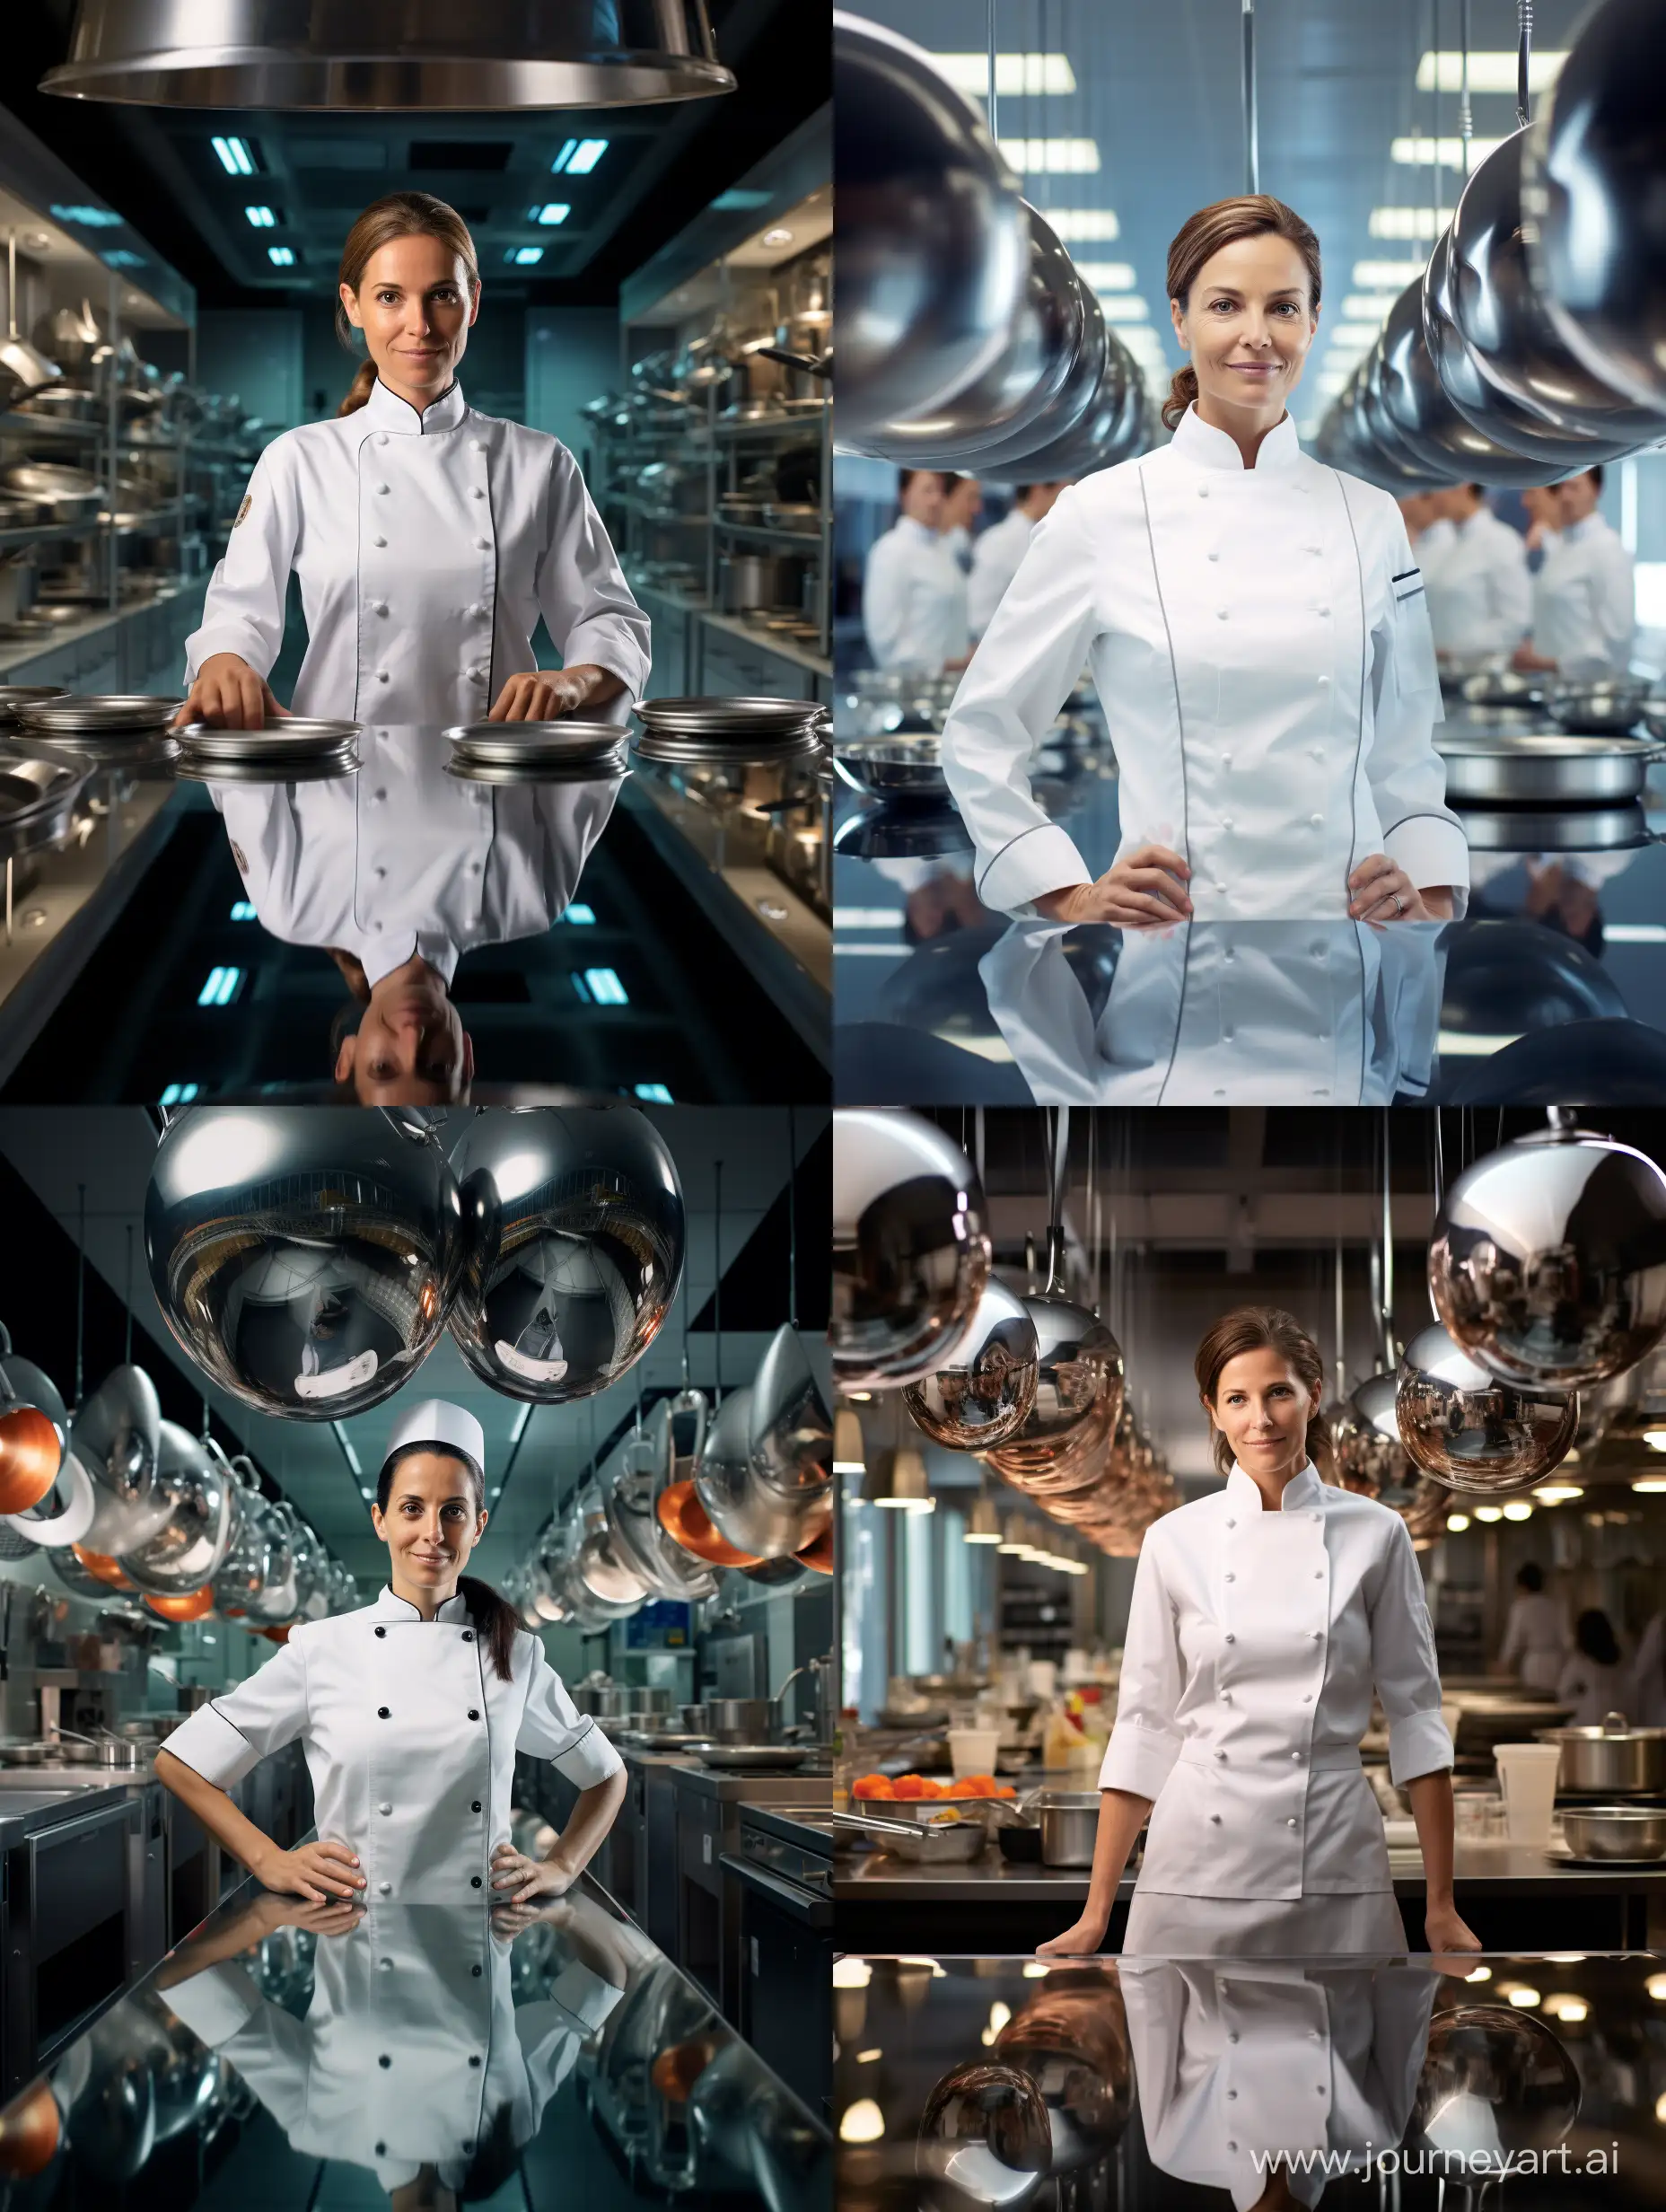 Futuristic-Kitchen-Elegance-European-Chefs-Reflective-Culinary-Moment